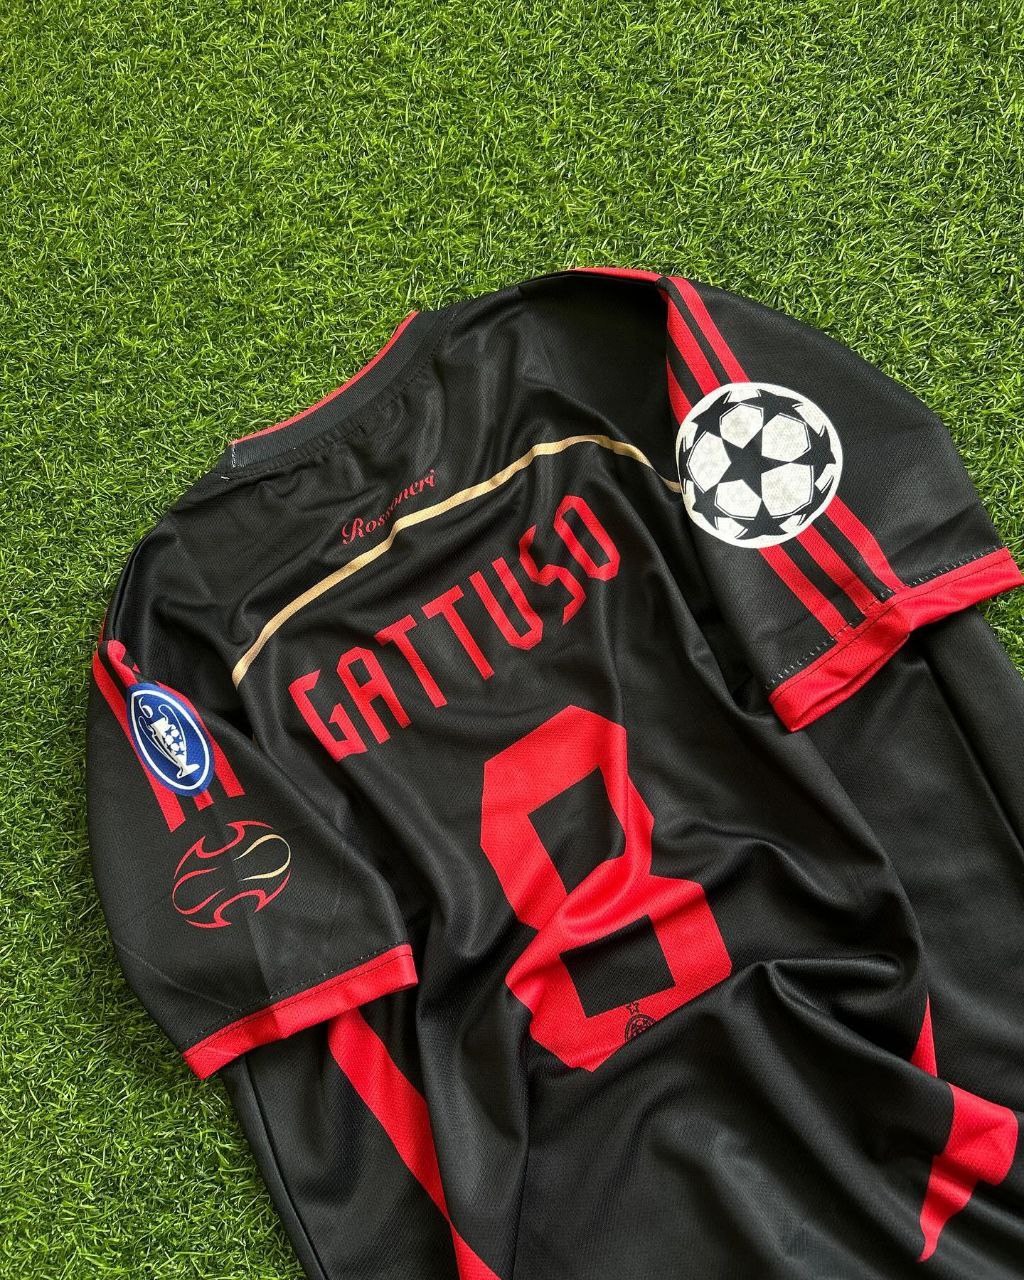 Gennaro Gattuso AC Mailand Schwarzes Retro-Trikot